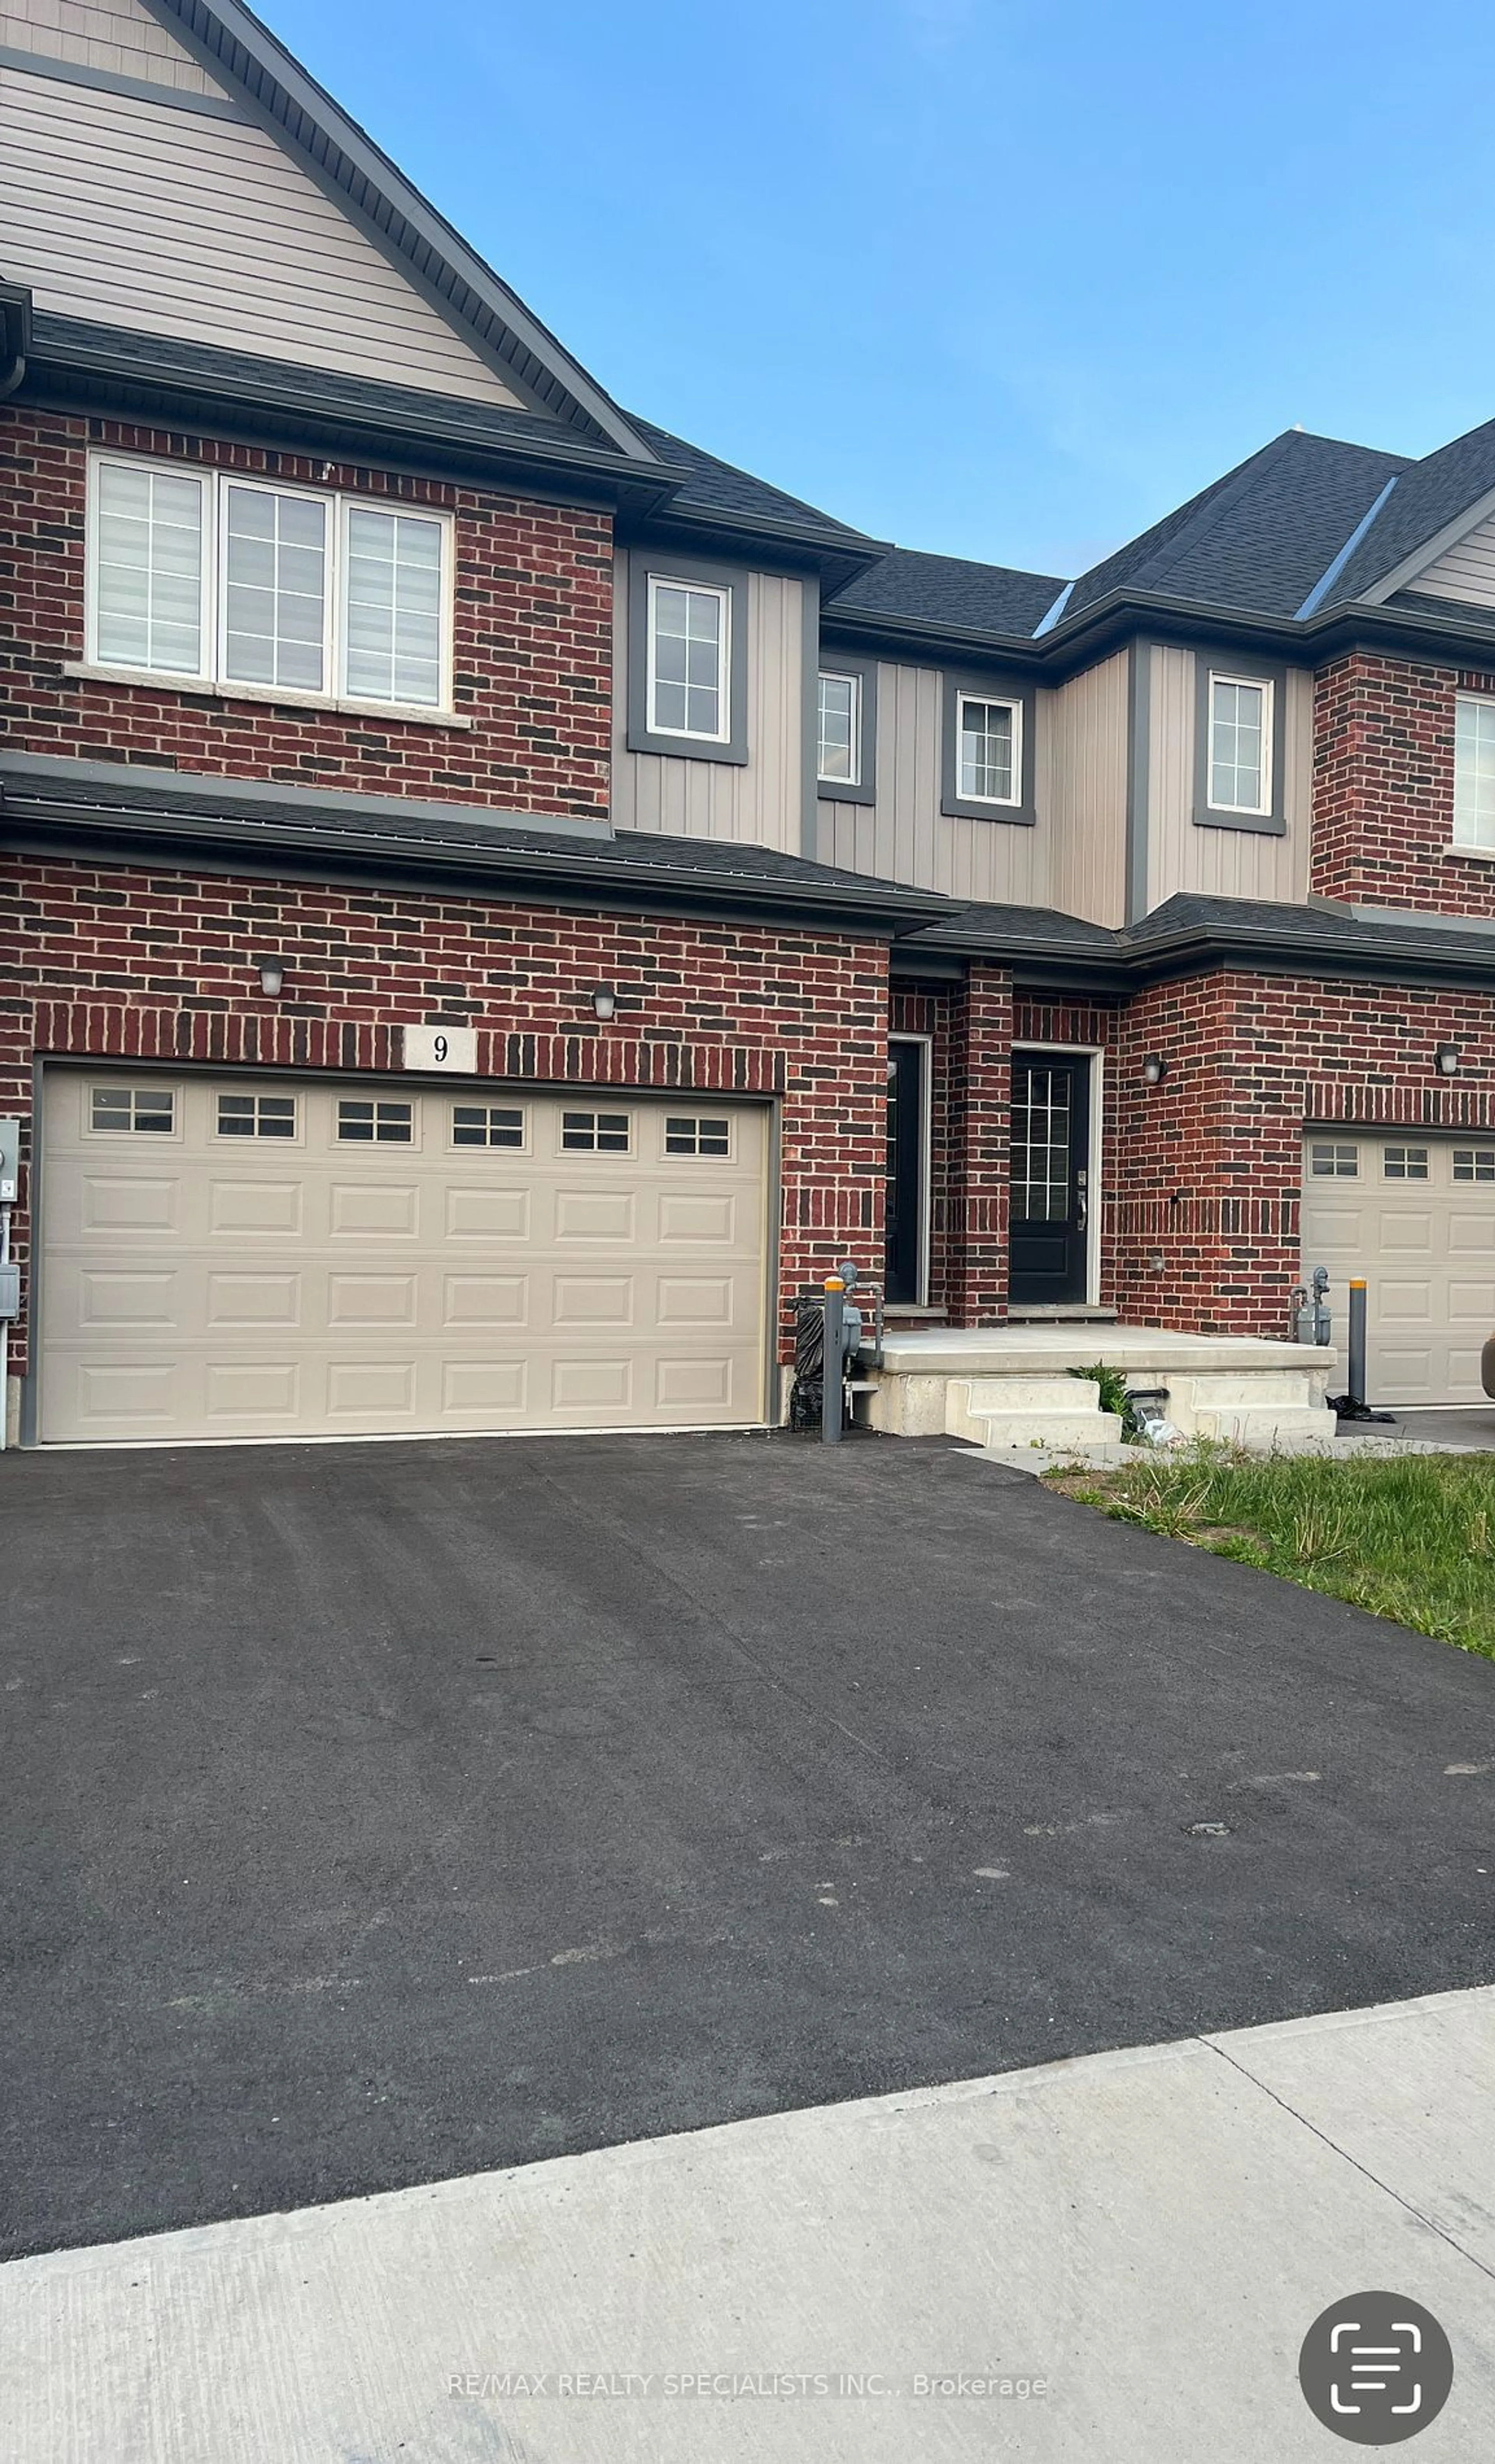 Home with brick exterior material for 9 Bur Oak Dr, Thorold Ontario L2V 0L9